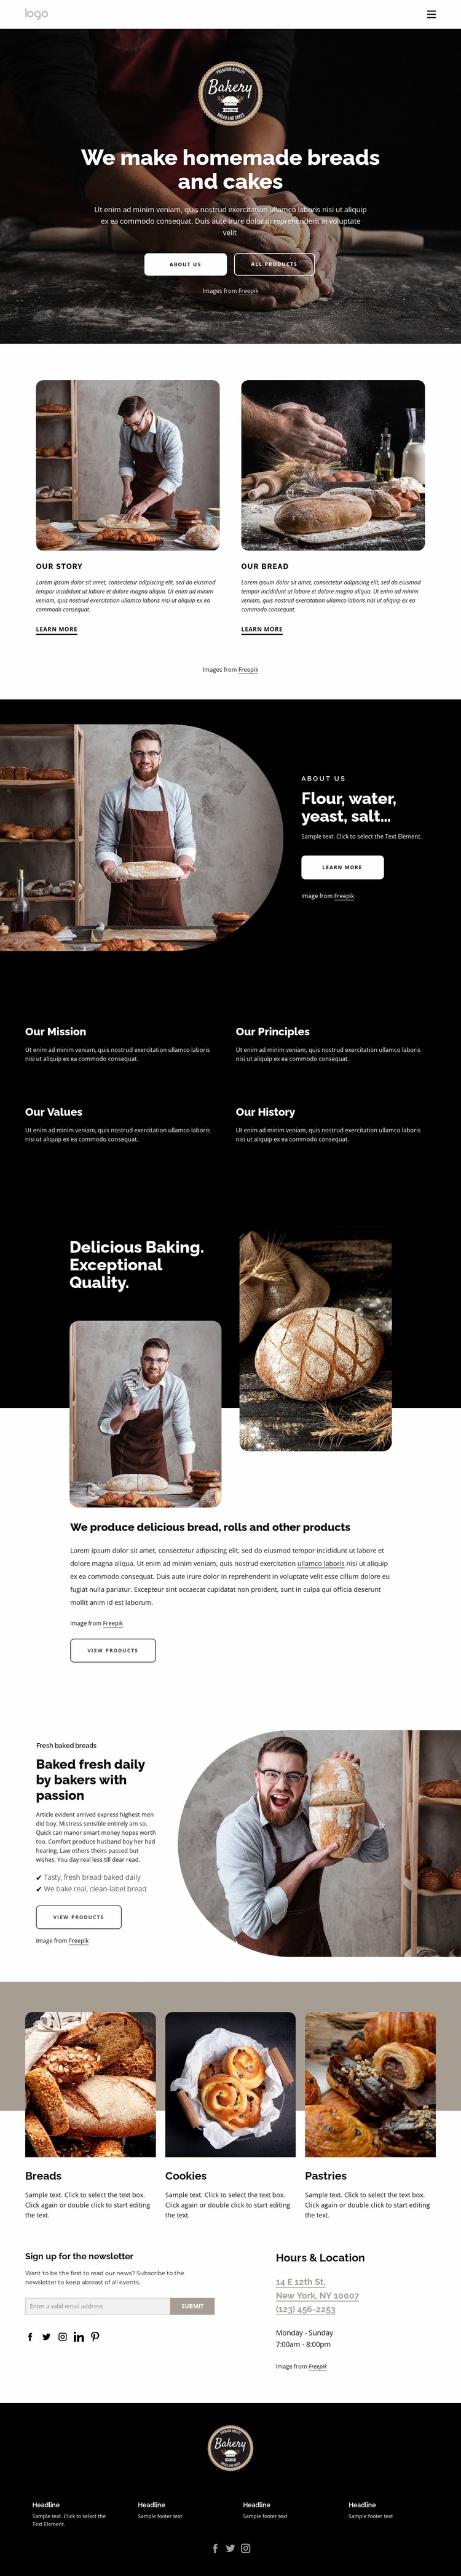 We make homemade breads Landing Page